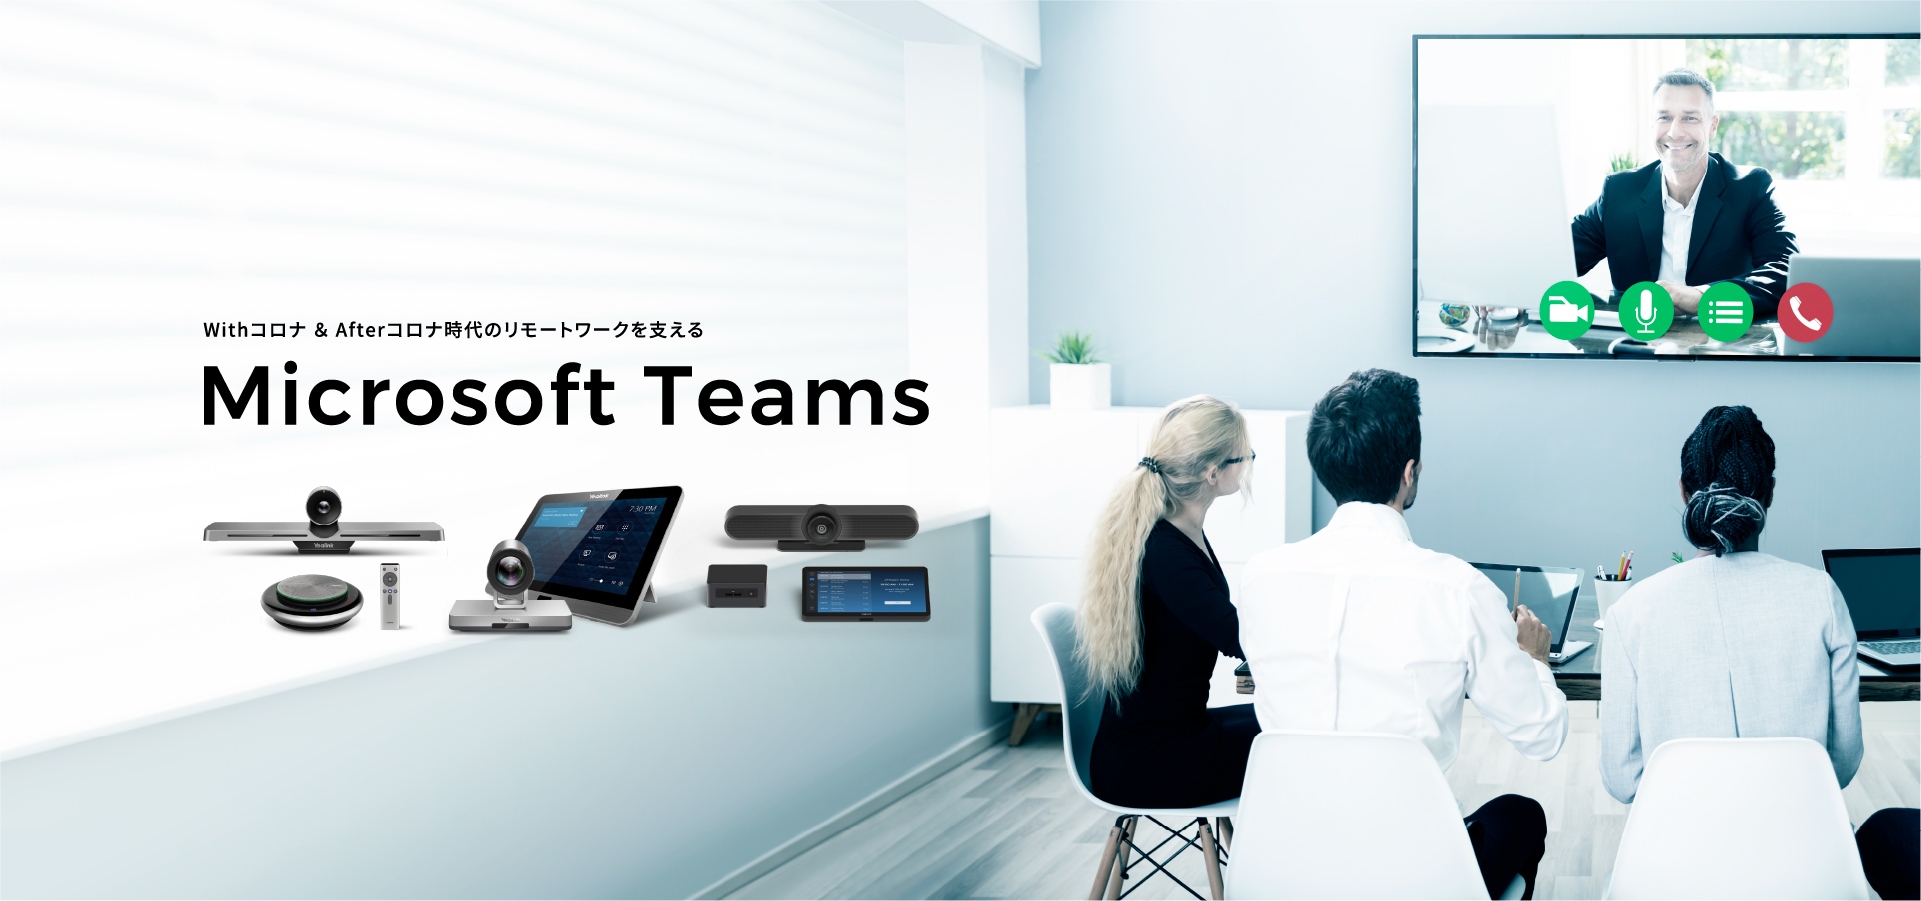 Withコロナ＆Afterコロナ時代のリモートワークを支える Microsoft Teams